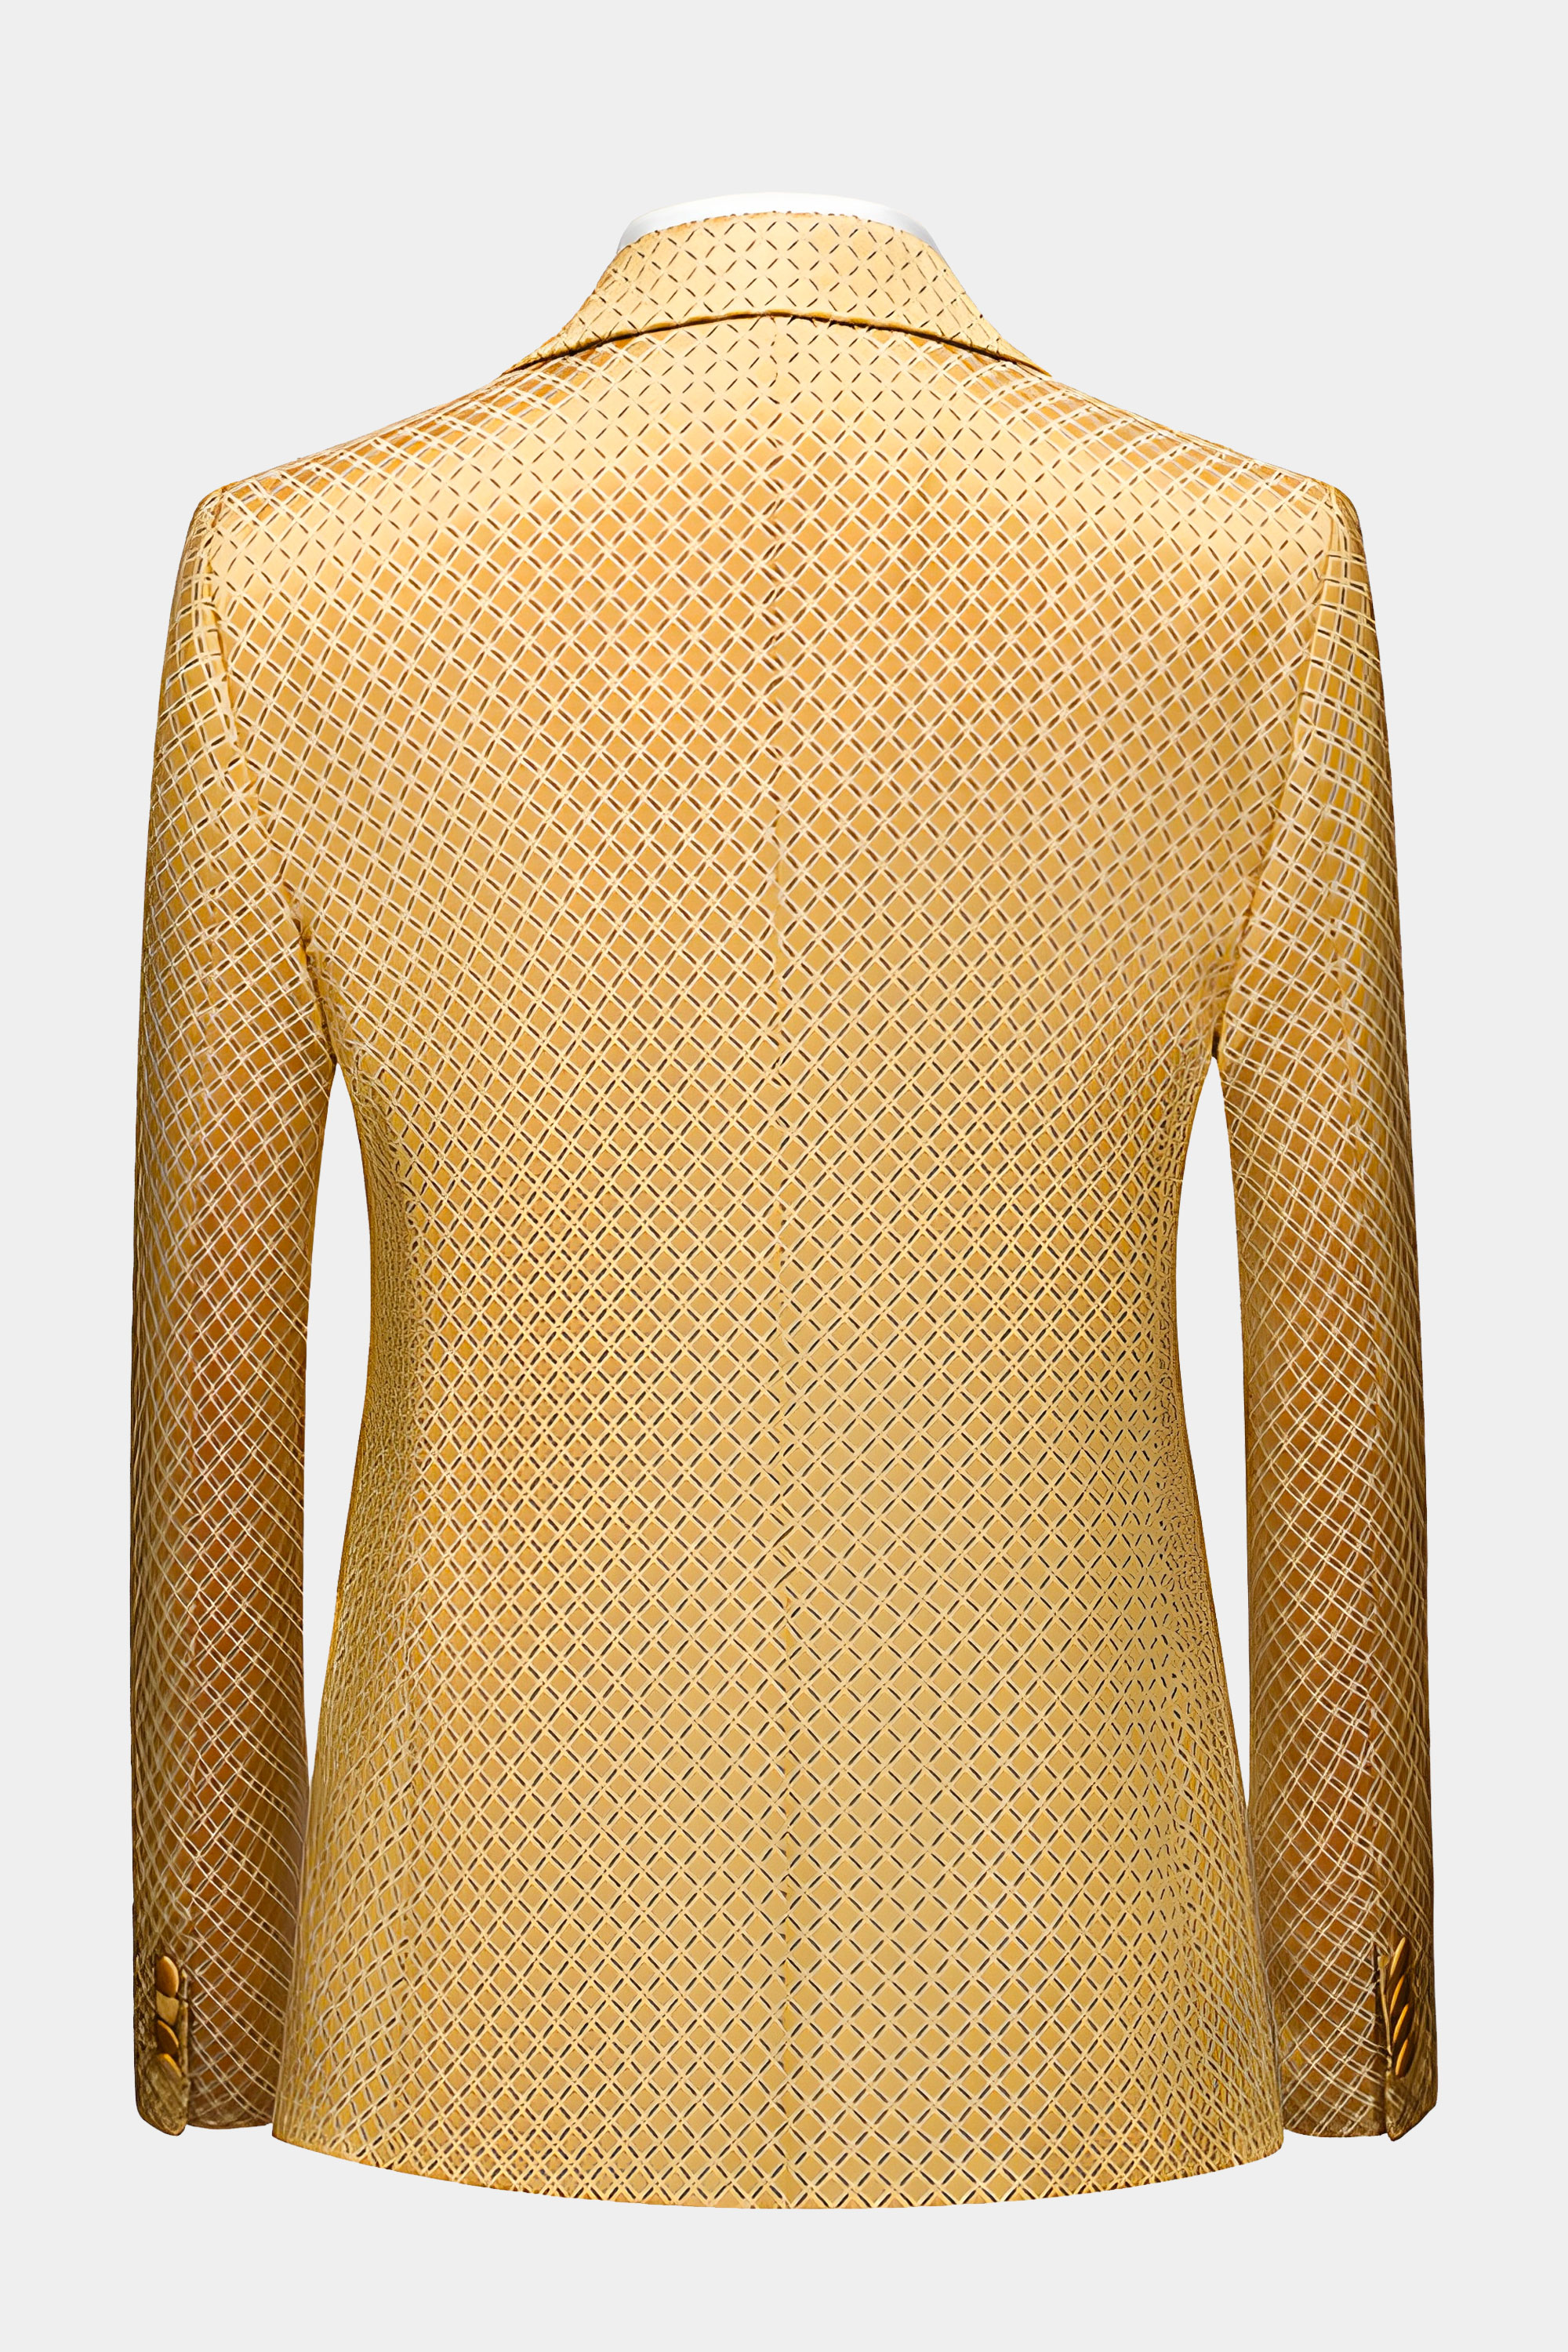 Gold-Checkered-Tuxedo-Jacket-from-Gentlemansguru.com